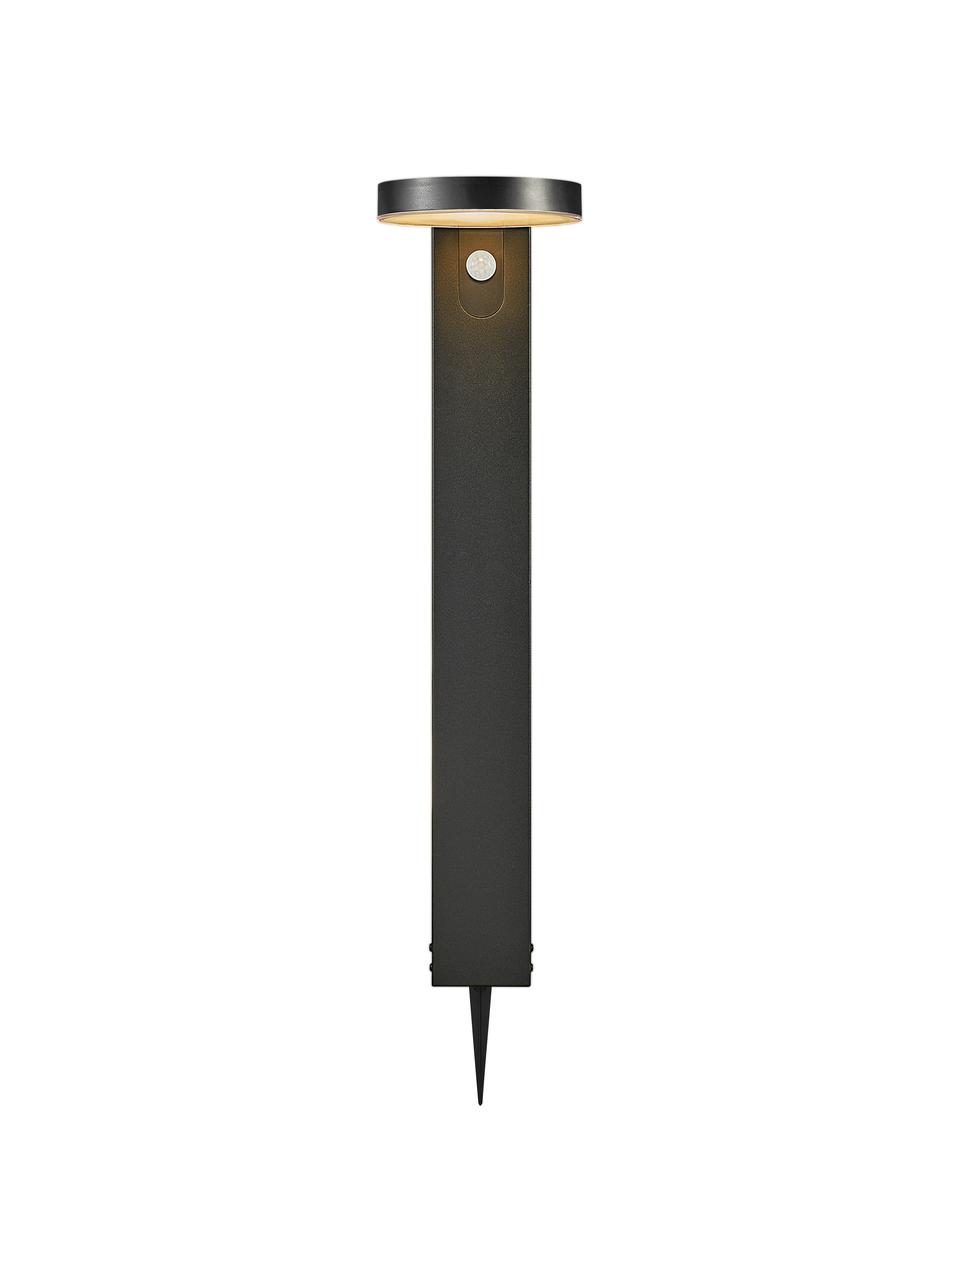 Borne lumineuse solaire Rica, Noir, larg. 15 x haut. 60 cm